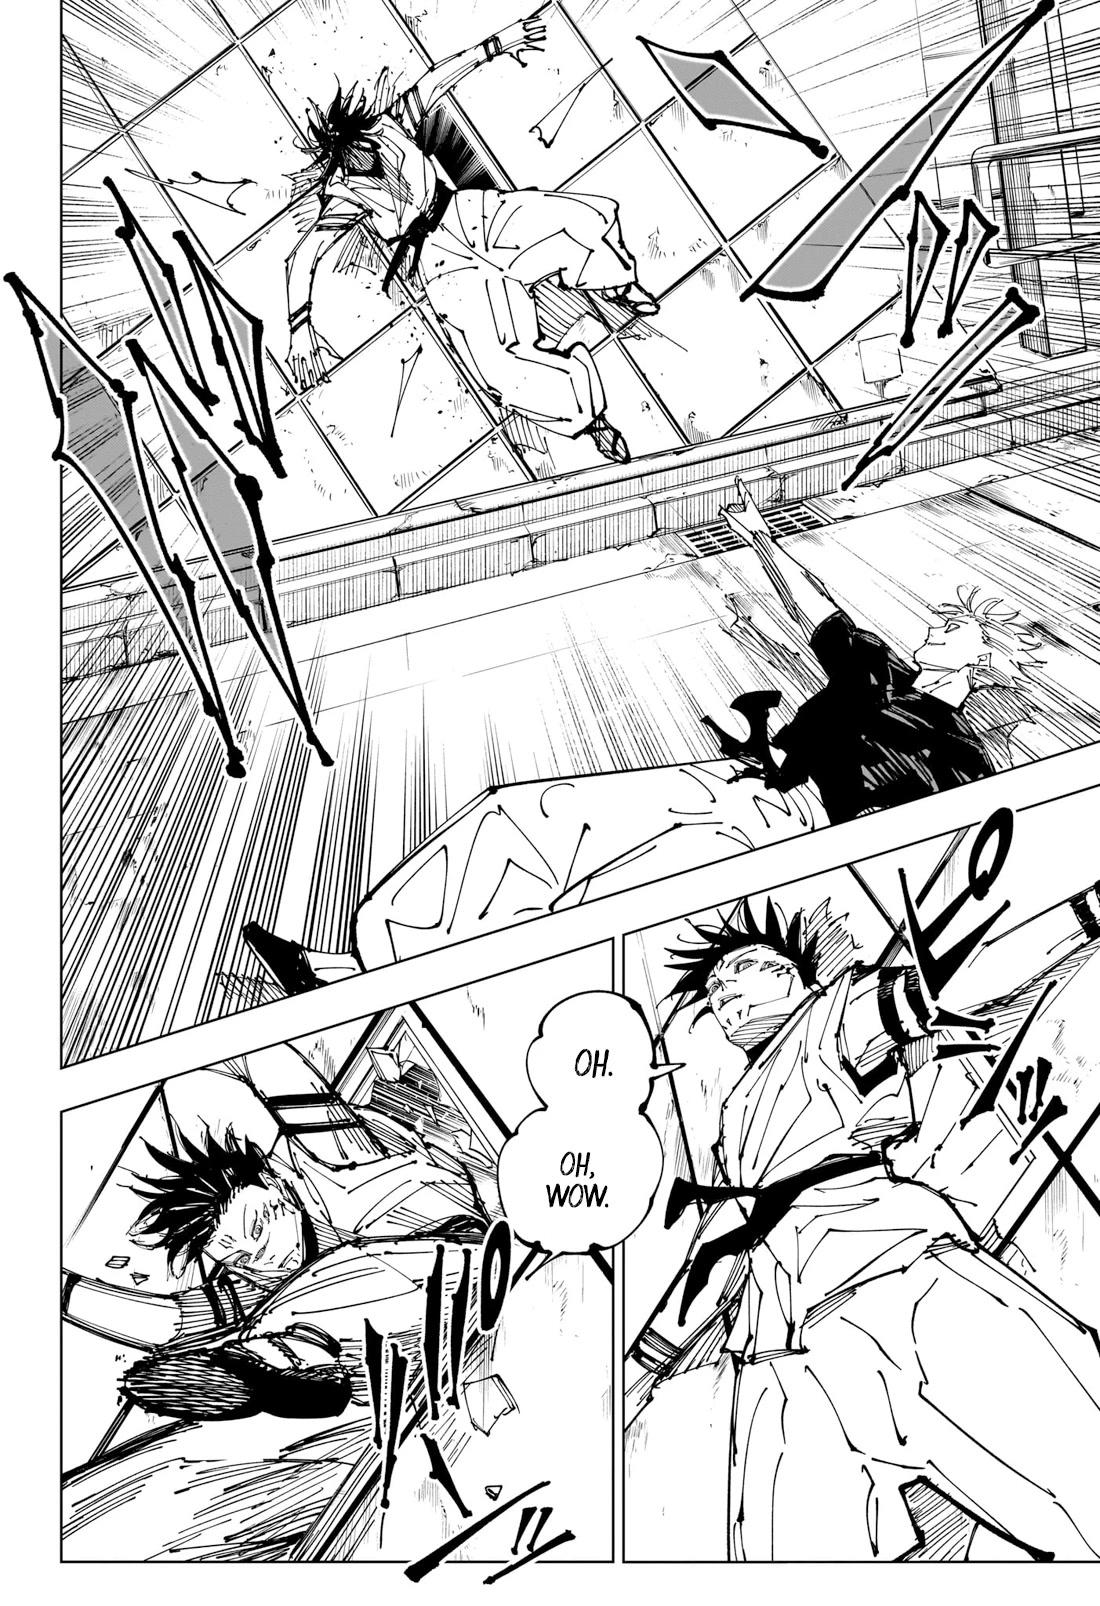 Jujutsu Kaisen Chapter 224: The Decisive Battle In The Uninhabited, Demon-Infested Shinjuku ② page 7 - Mangakakalot